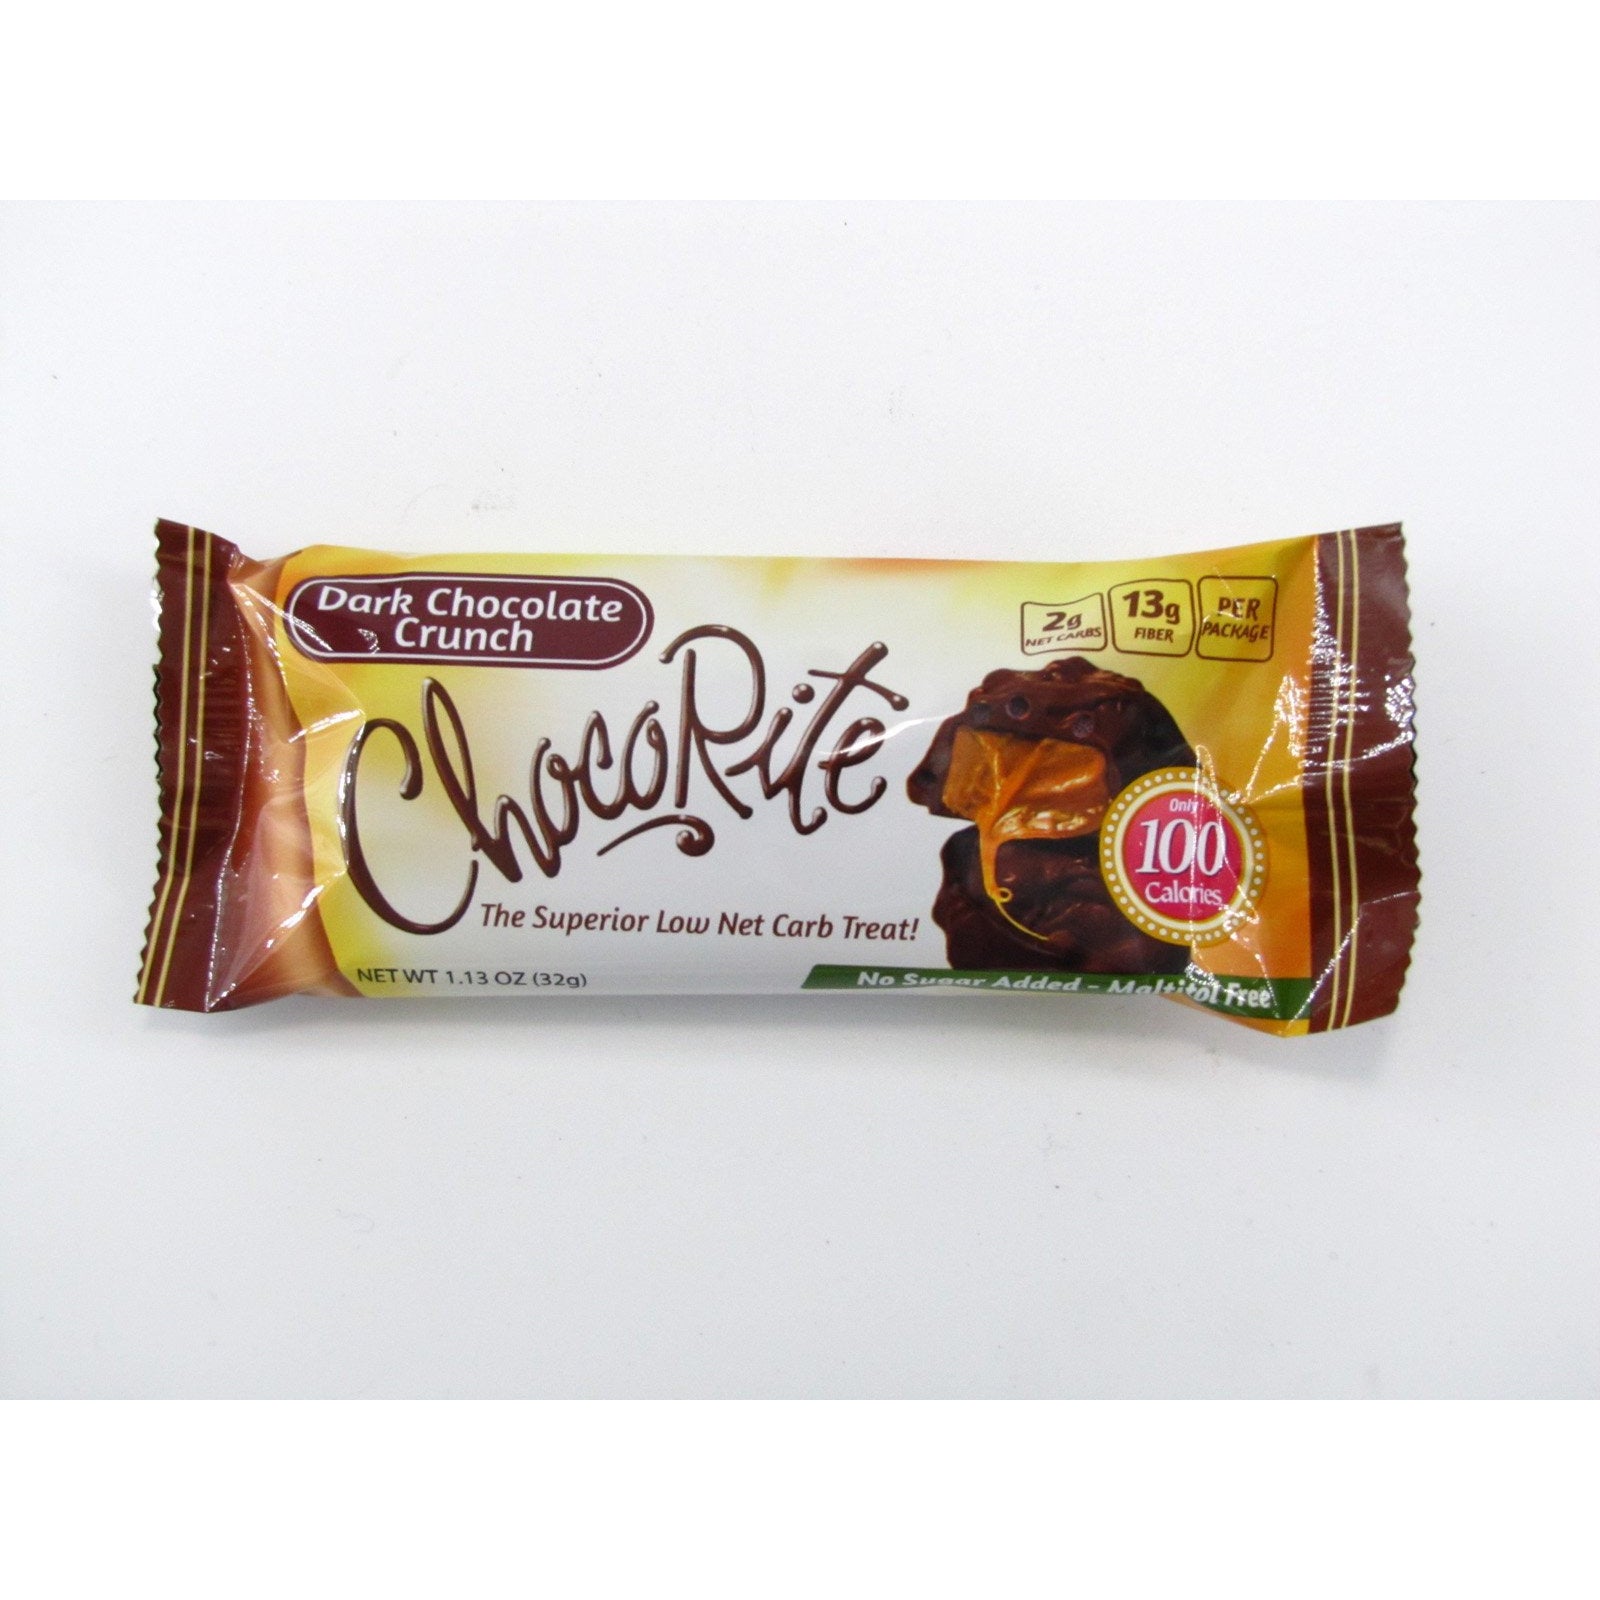 ChocoRite Low Carb KETO Candy Bars Chocolate (1 bar) Protein Snacks Dark Chocolate Crunch BEST BY 09/2021 ChocoRite